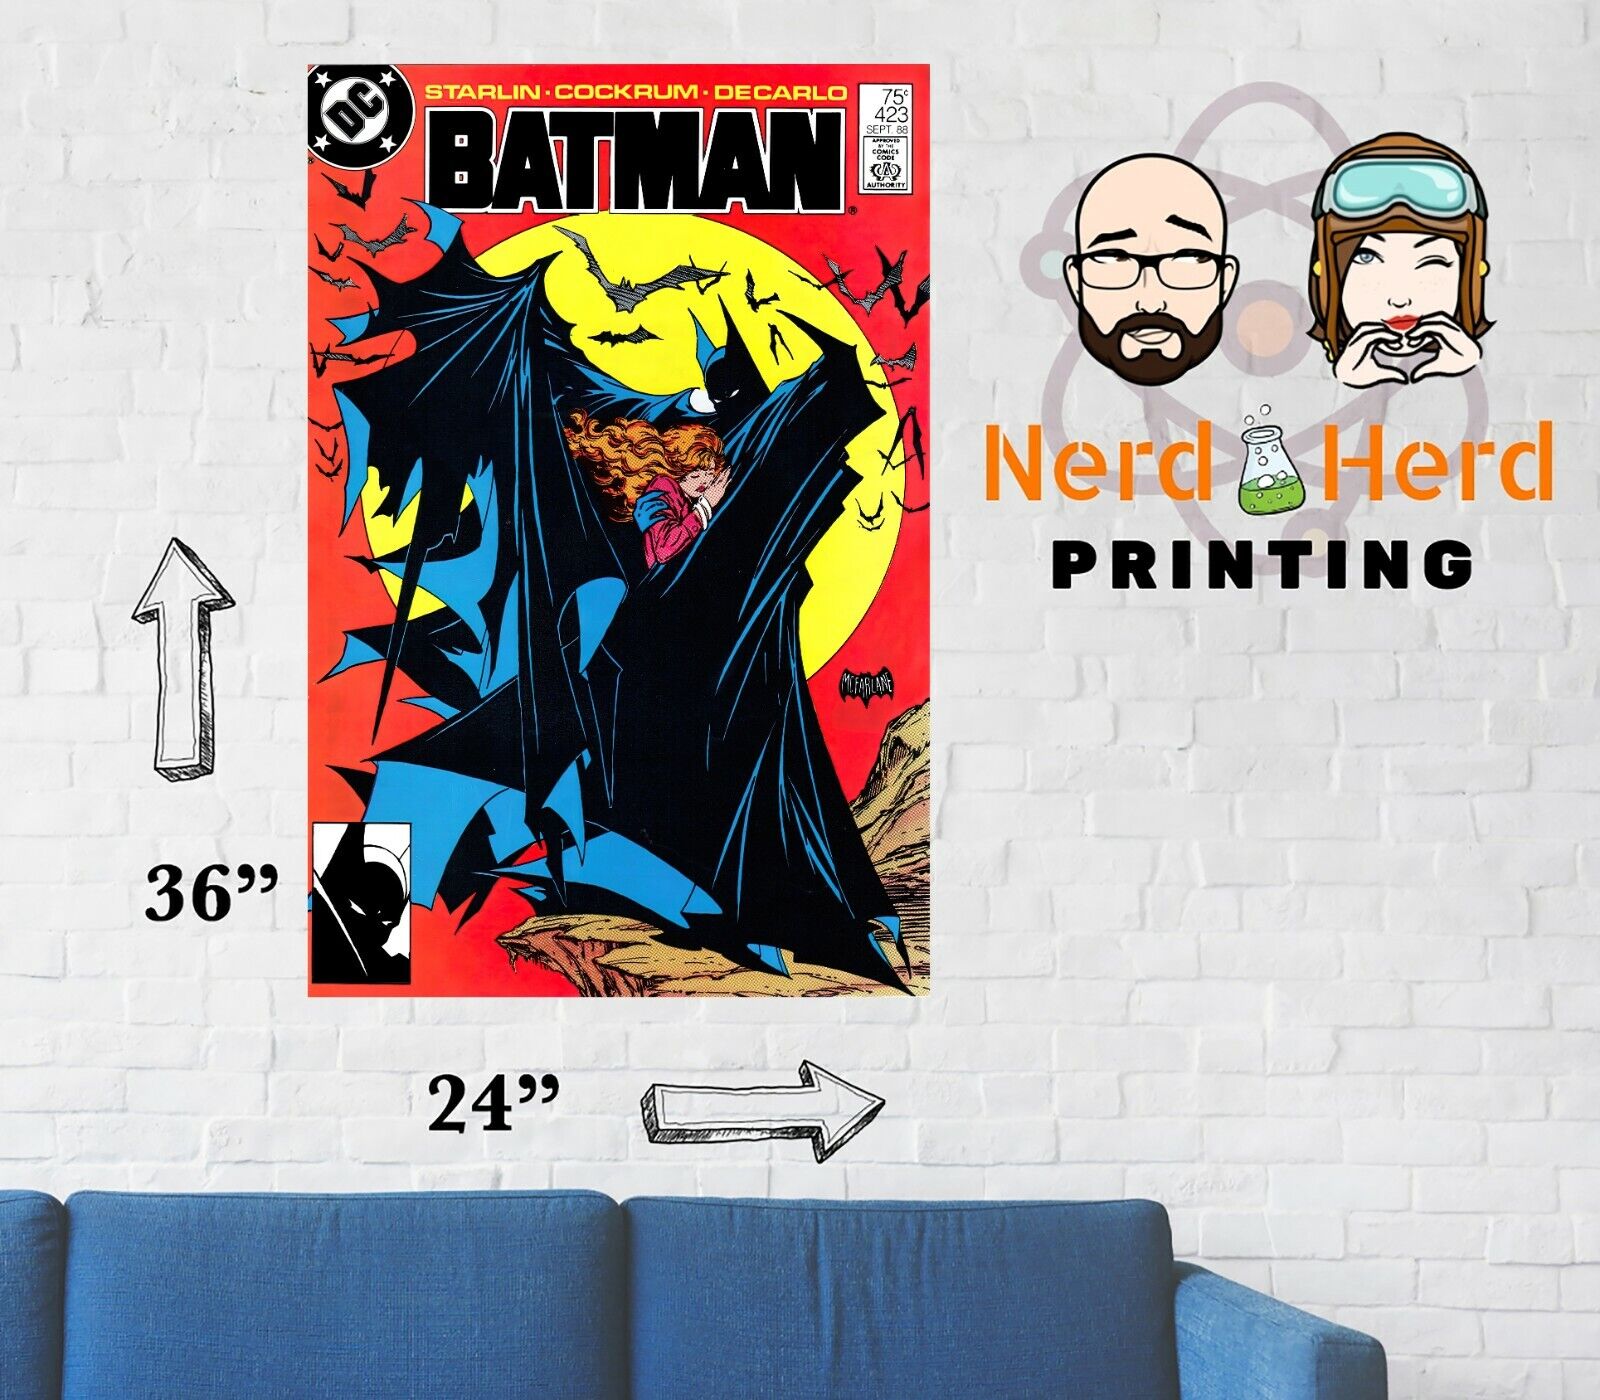 Batman #423 Comic Cover Wall Poster Multiple Sizes 11x17-24x36